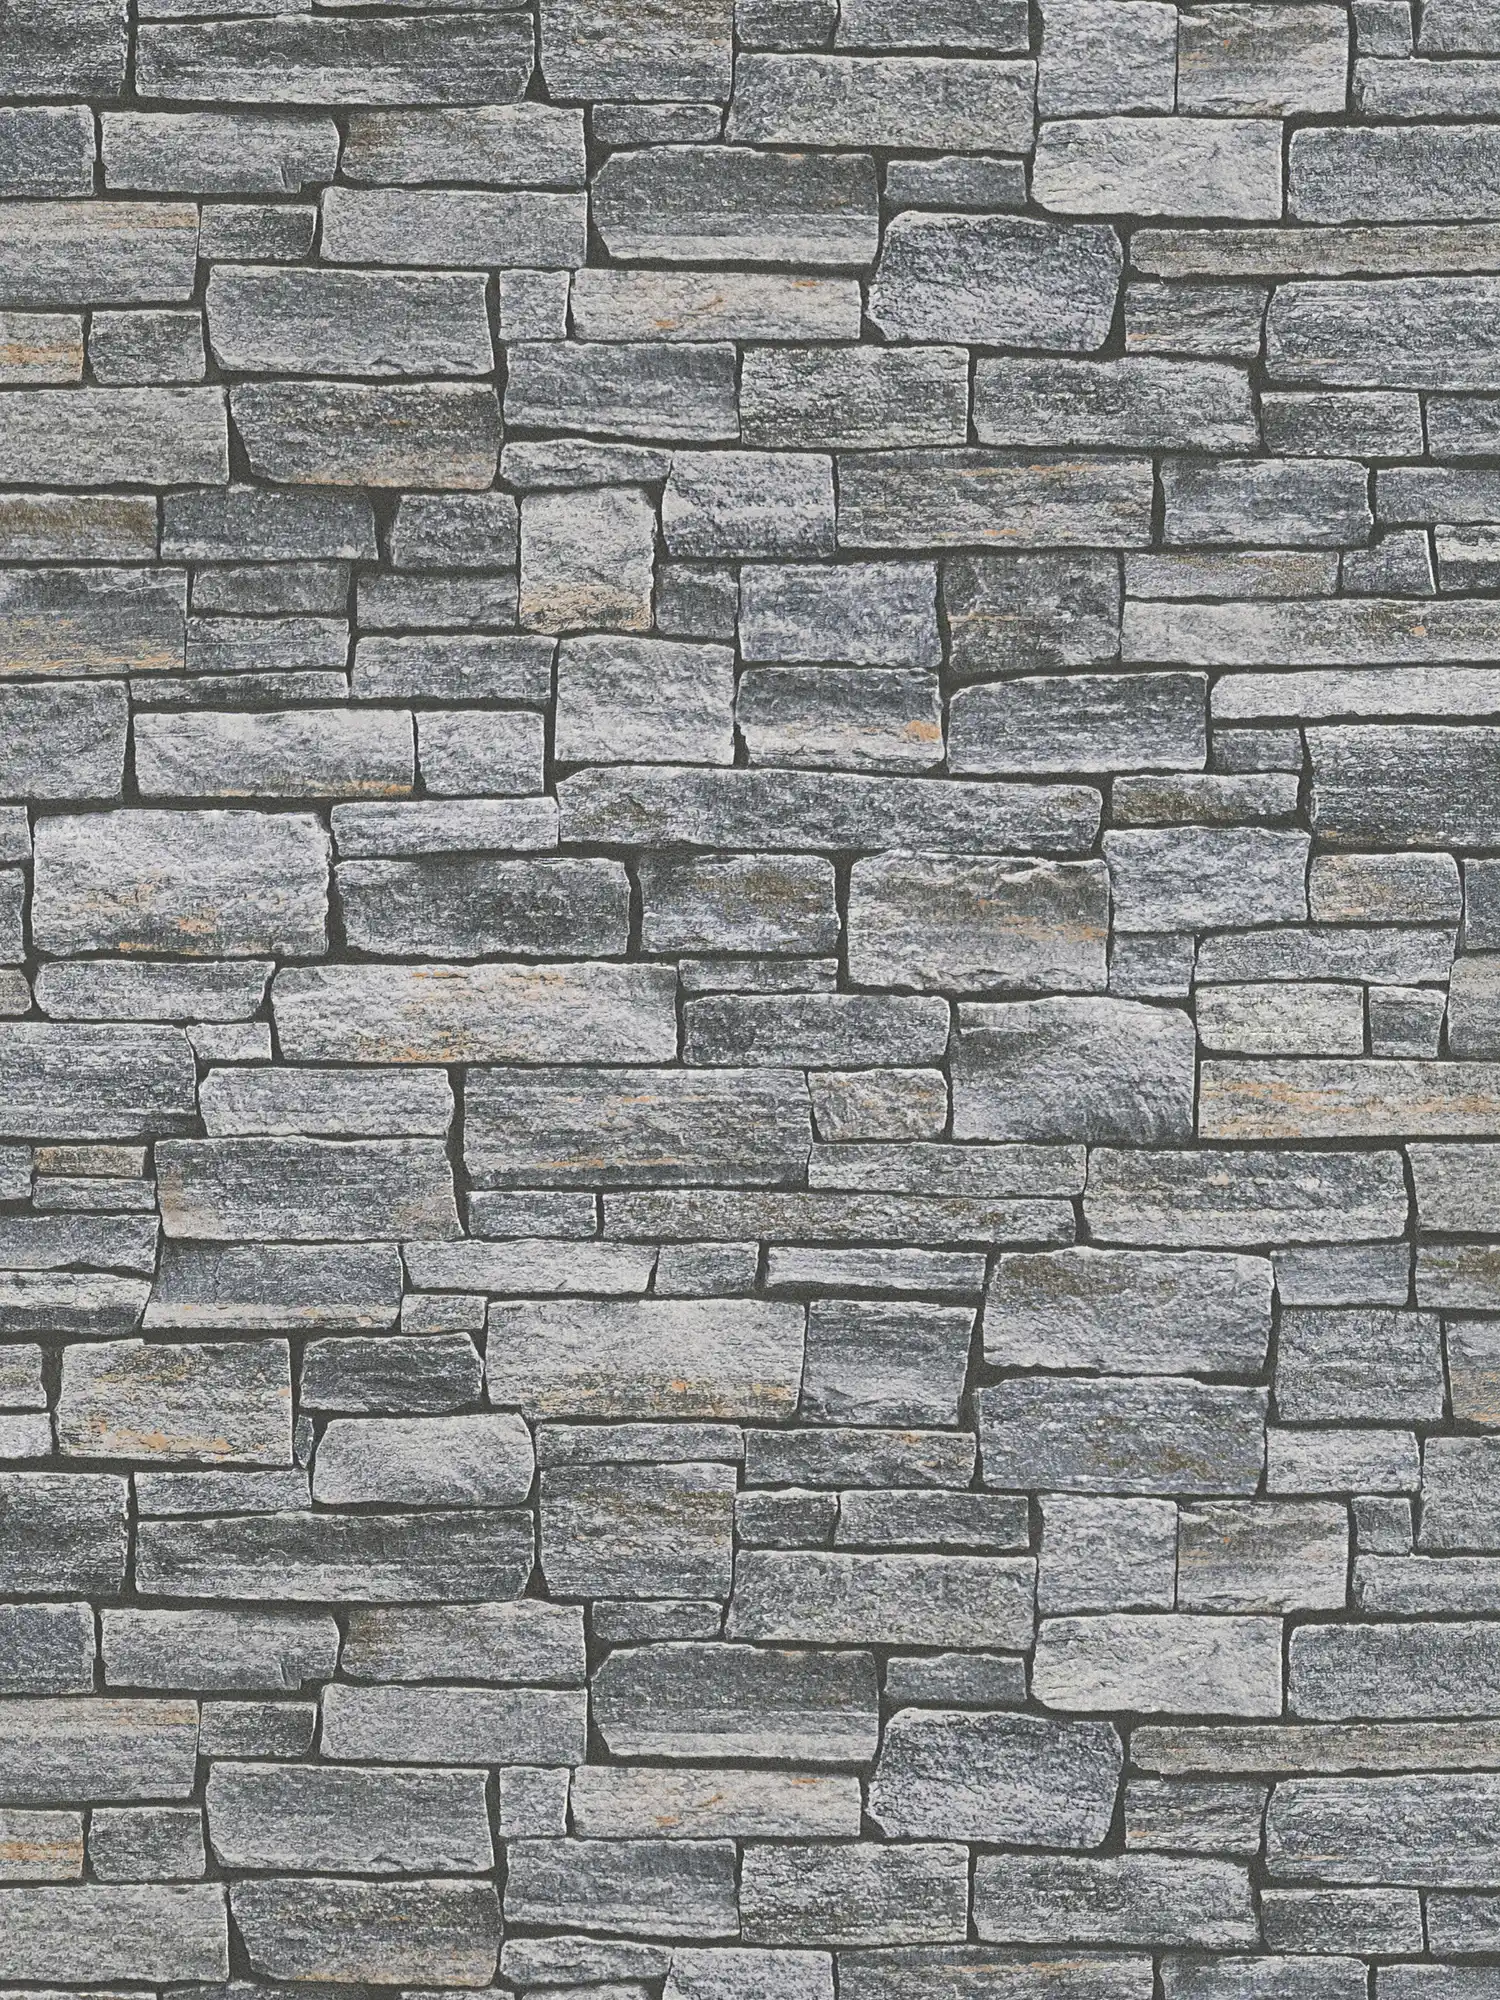 Wallpaper with stone look & natural wall motif - grey, black, brown
